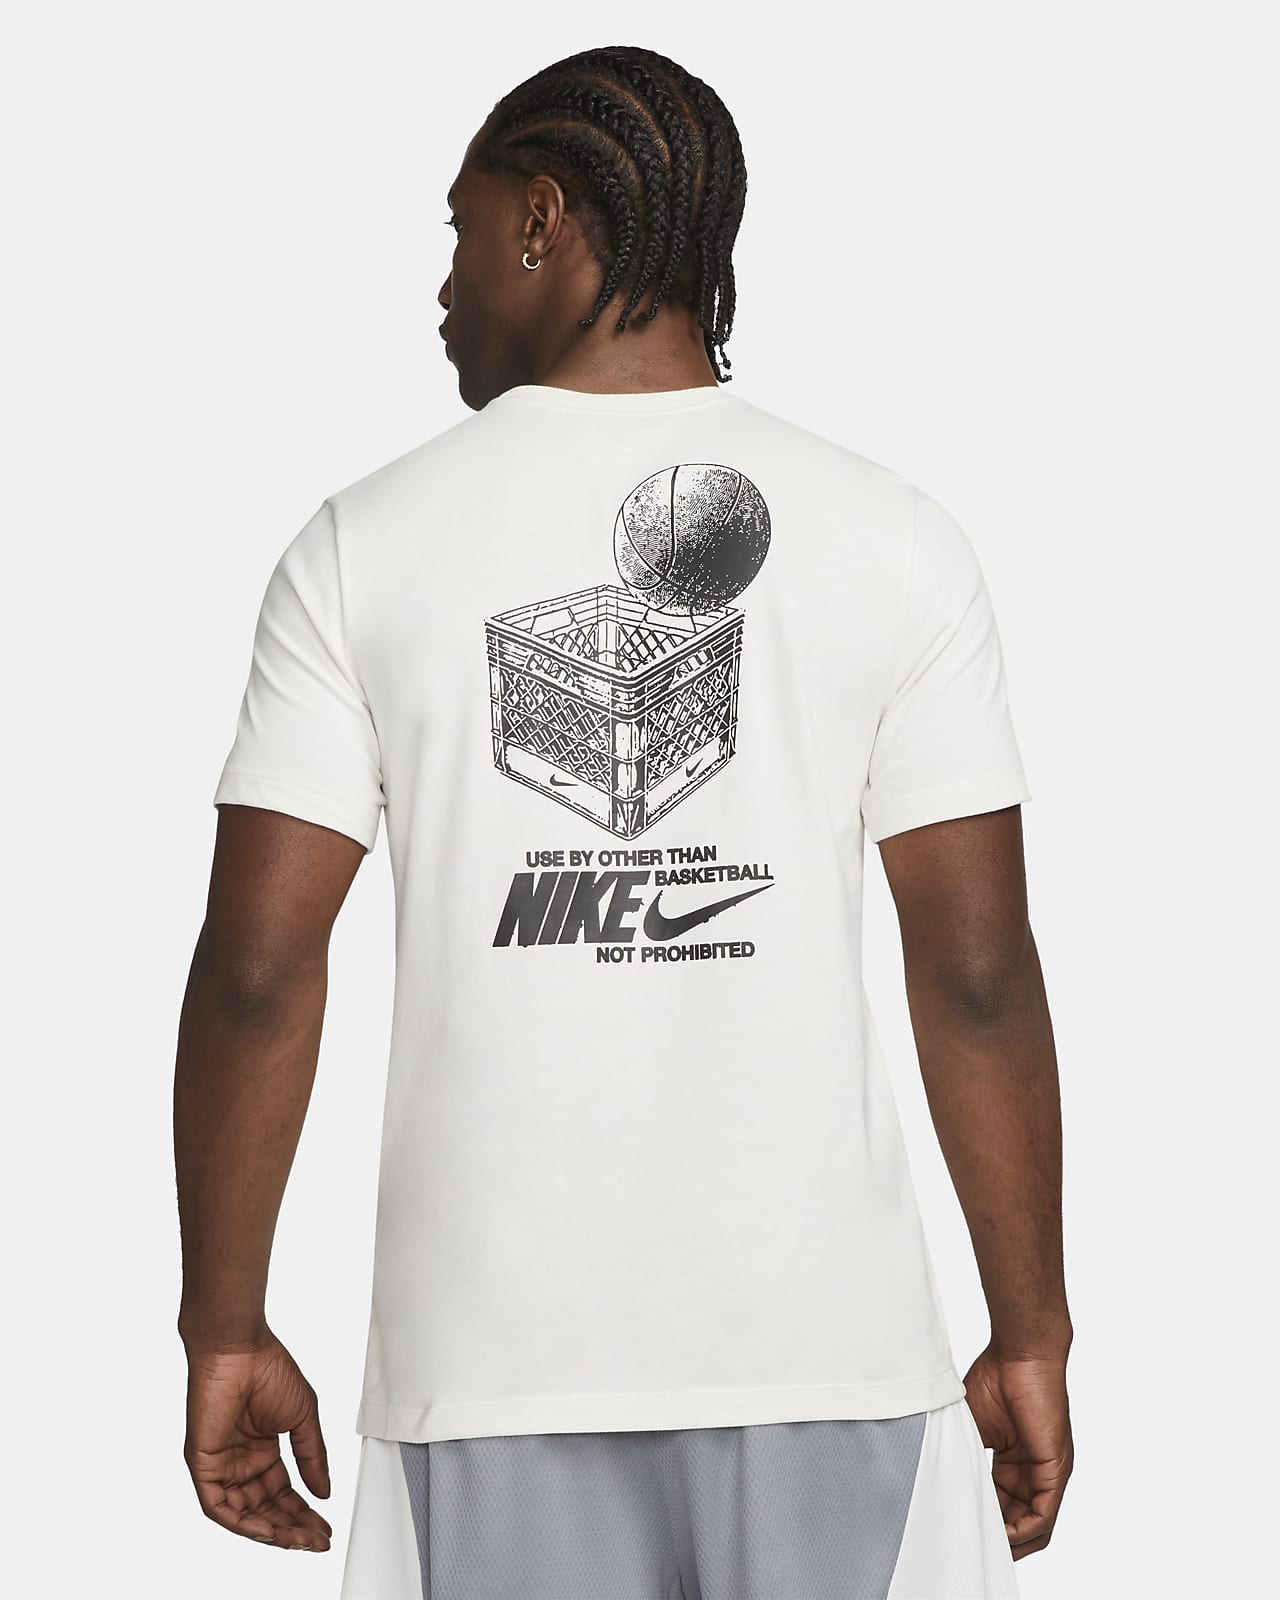 Nike Men's Basketball Nike.com